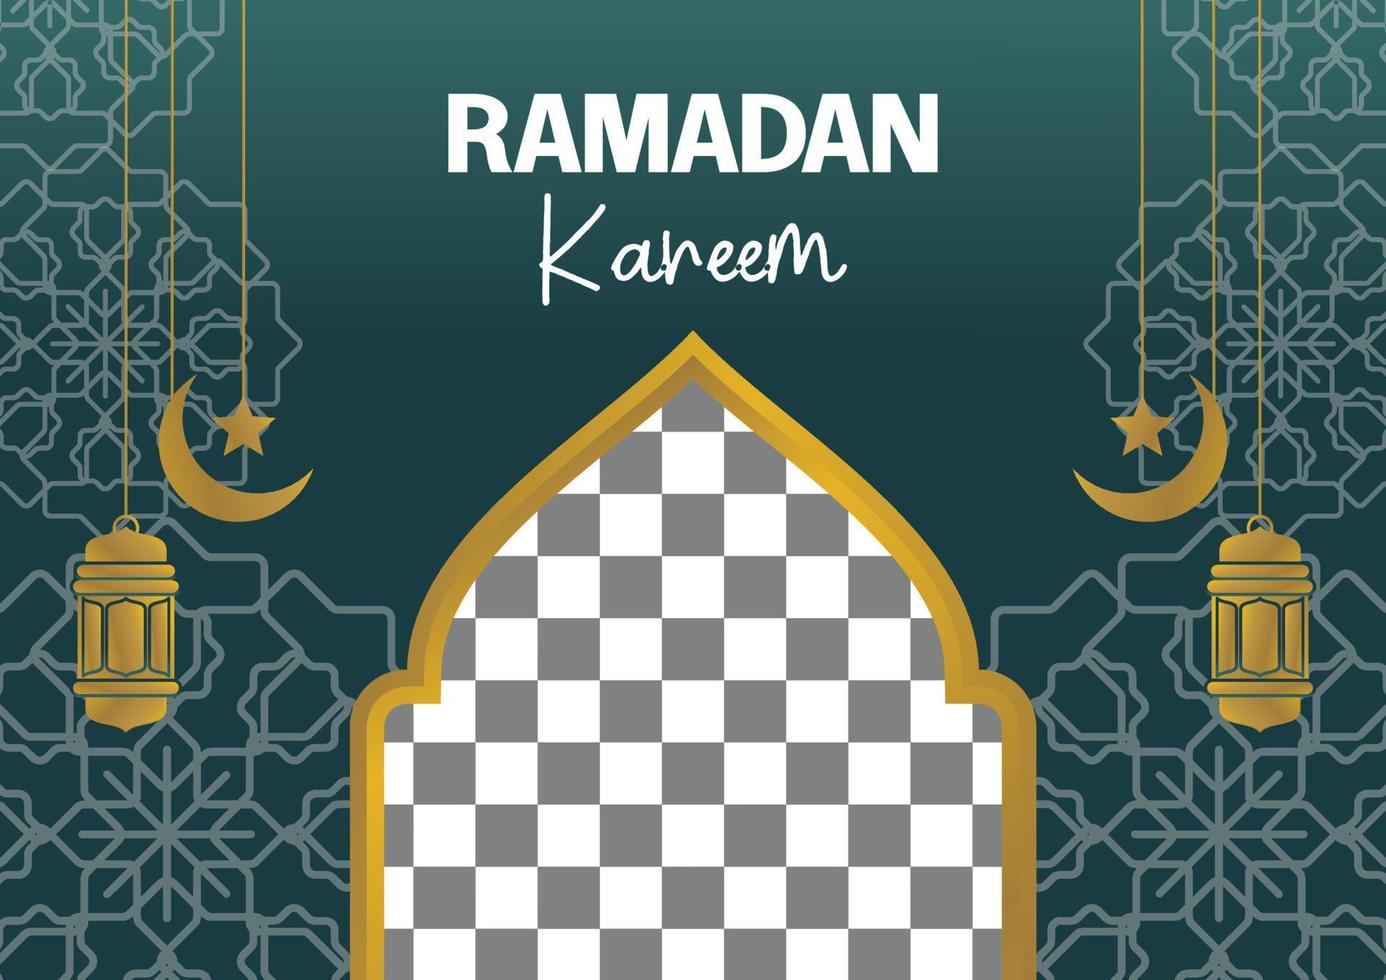 editable ramadan sale poster templates. with mandala, moon, star and lantern ornaments. Design for social media and web. Vector illustration